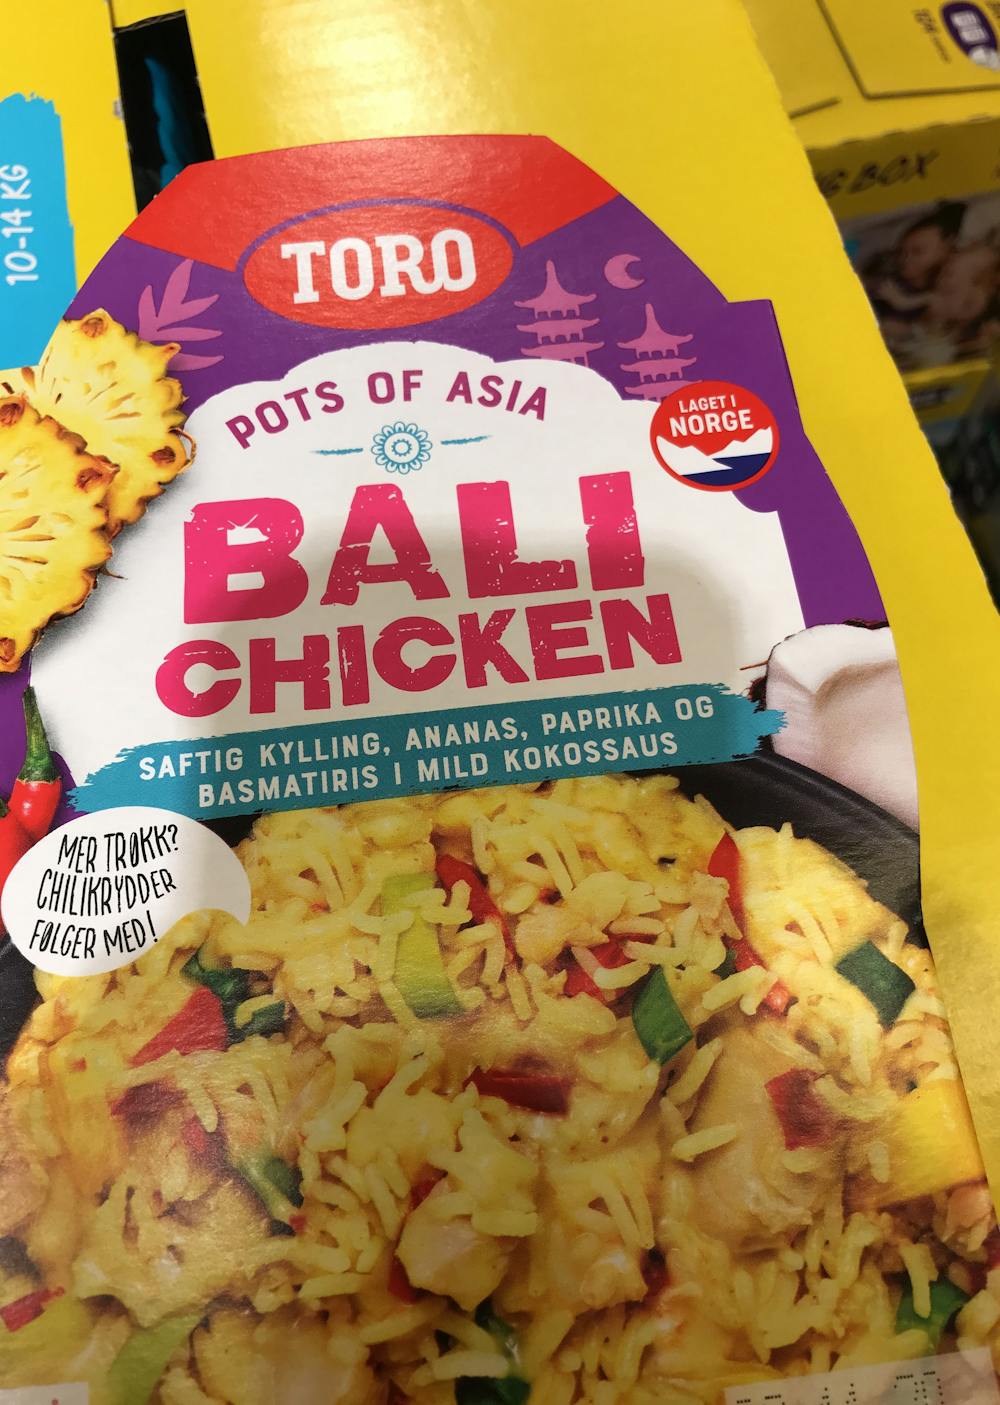 Bli chicken , Toro